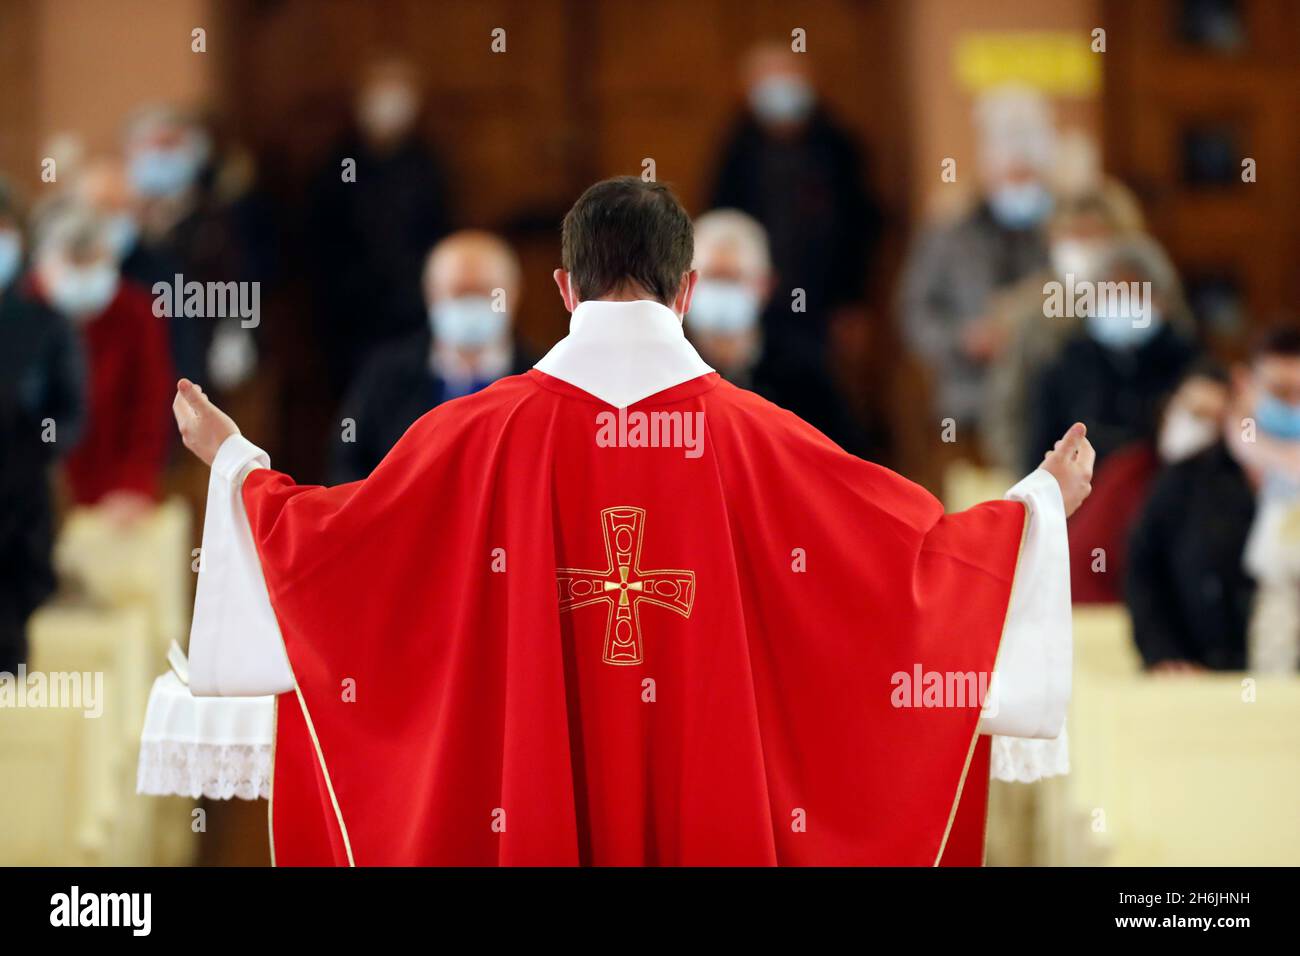 Catholic Mass, Holy week, Eucharist celebration, Saint Joseph des Fins Church, Annecy, Haute-Savoie, France, Europe Stock Photo